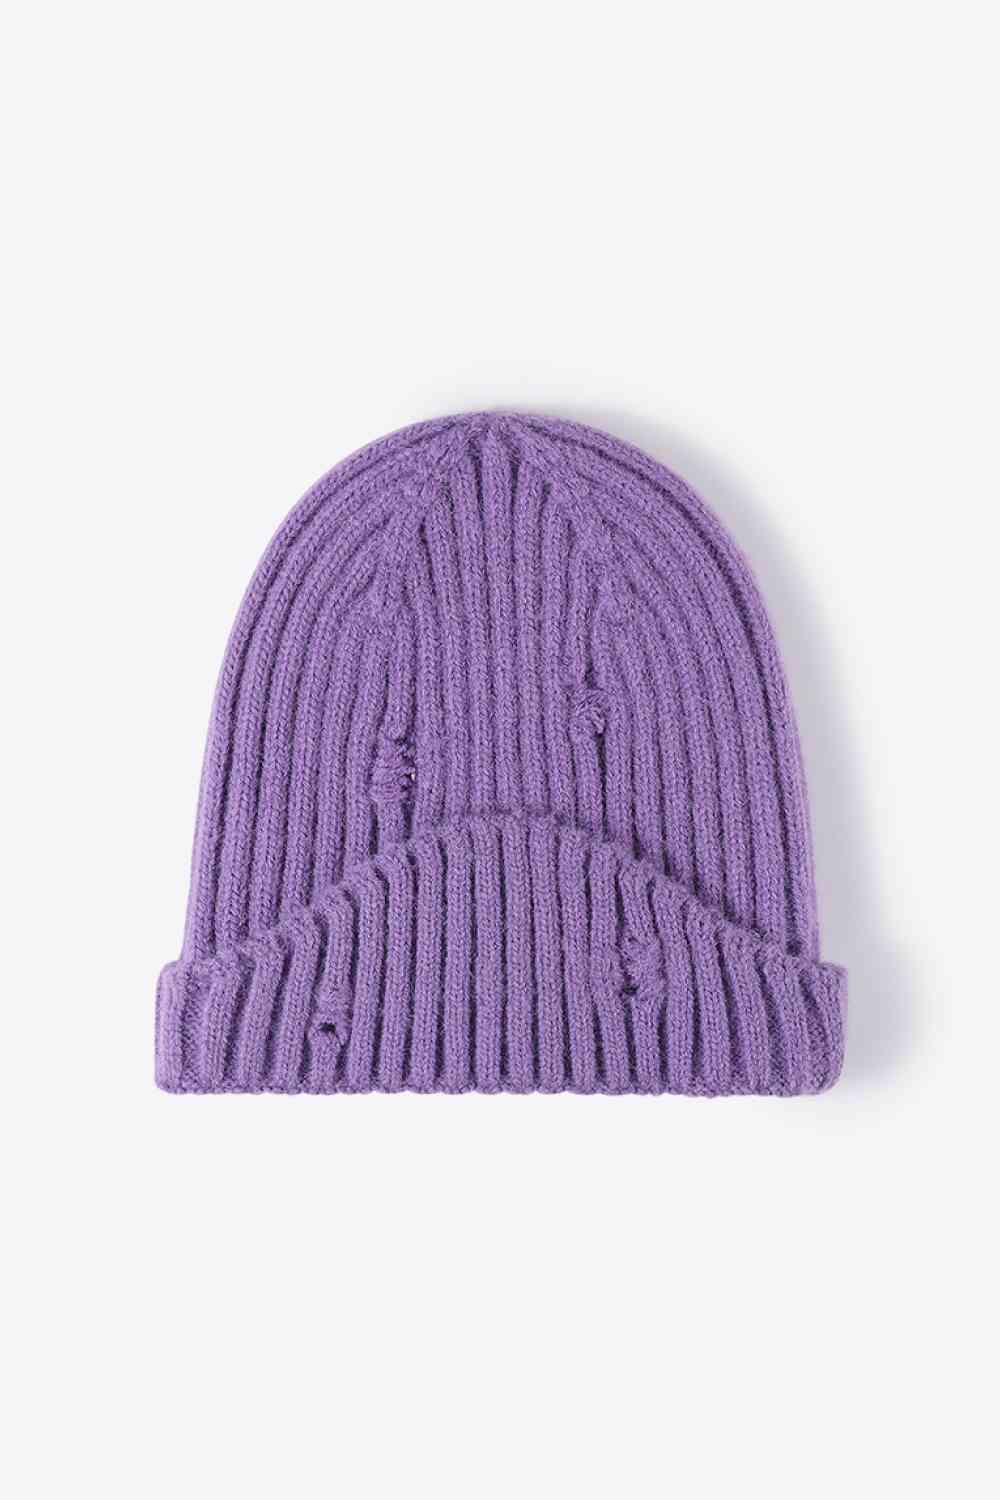 Distressed Rib-Knit Beanie Purple One Size